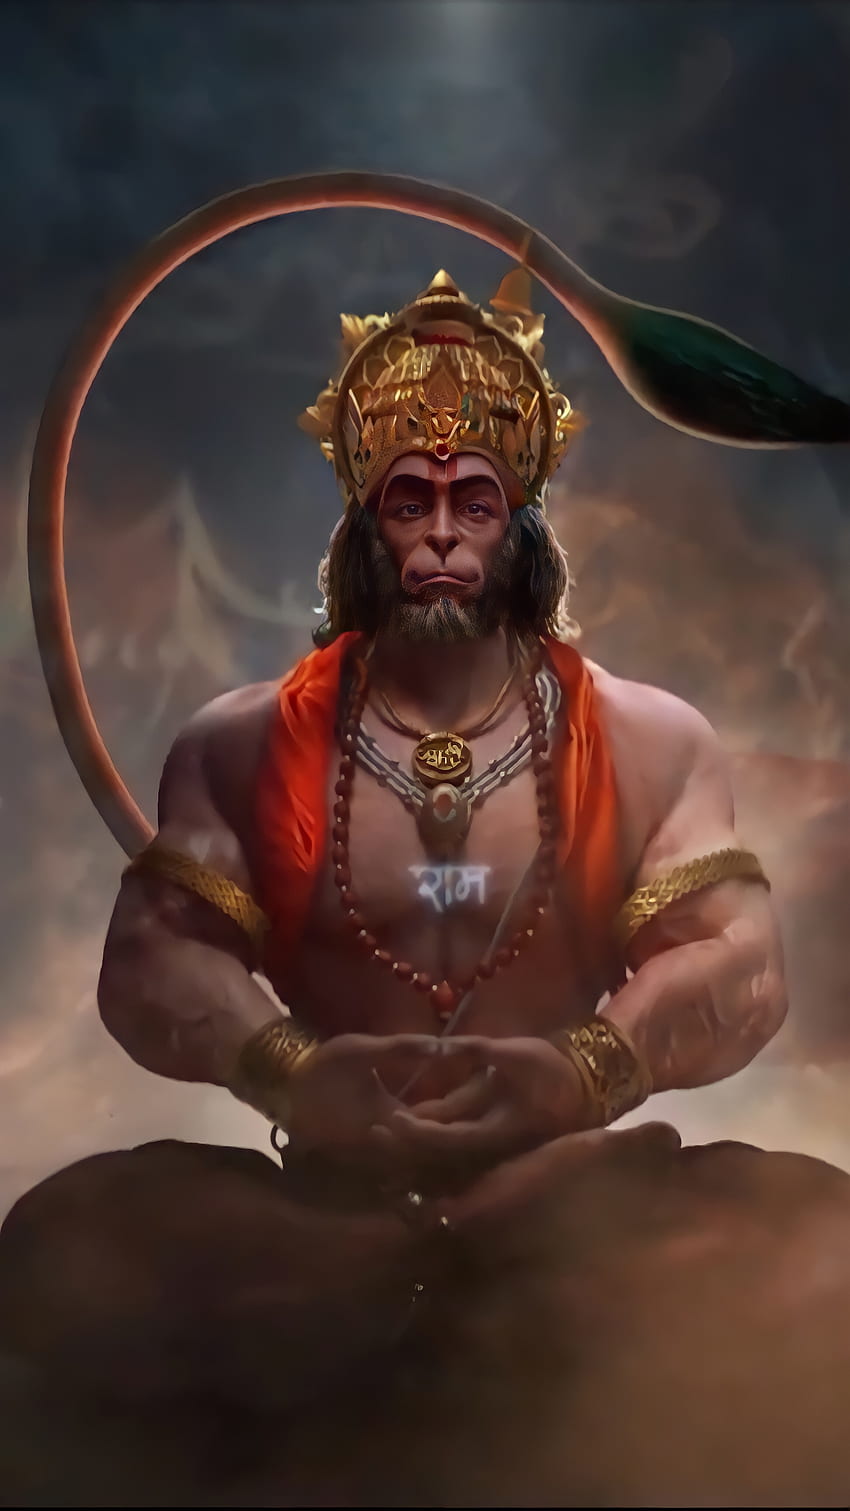 Hanuman for iphone – Jai shri ram – Ghantee, Hanuman Meditation HD ...